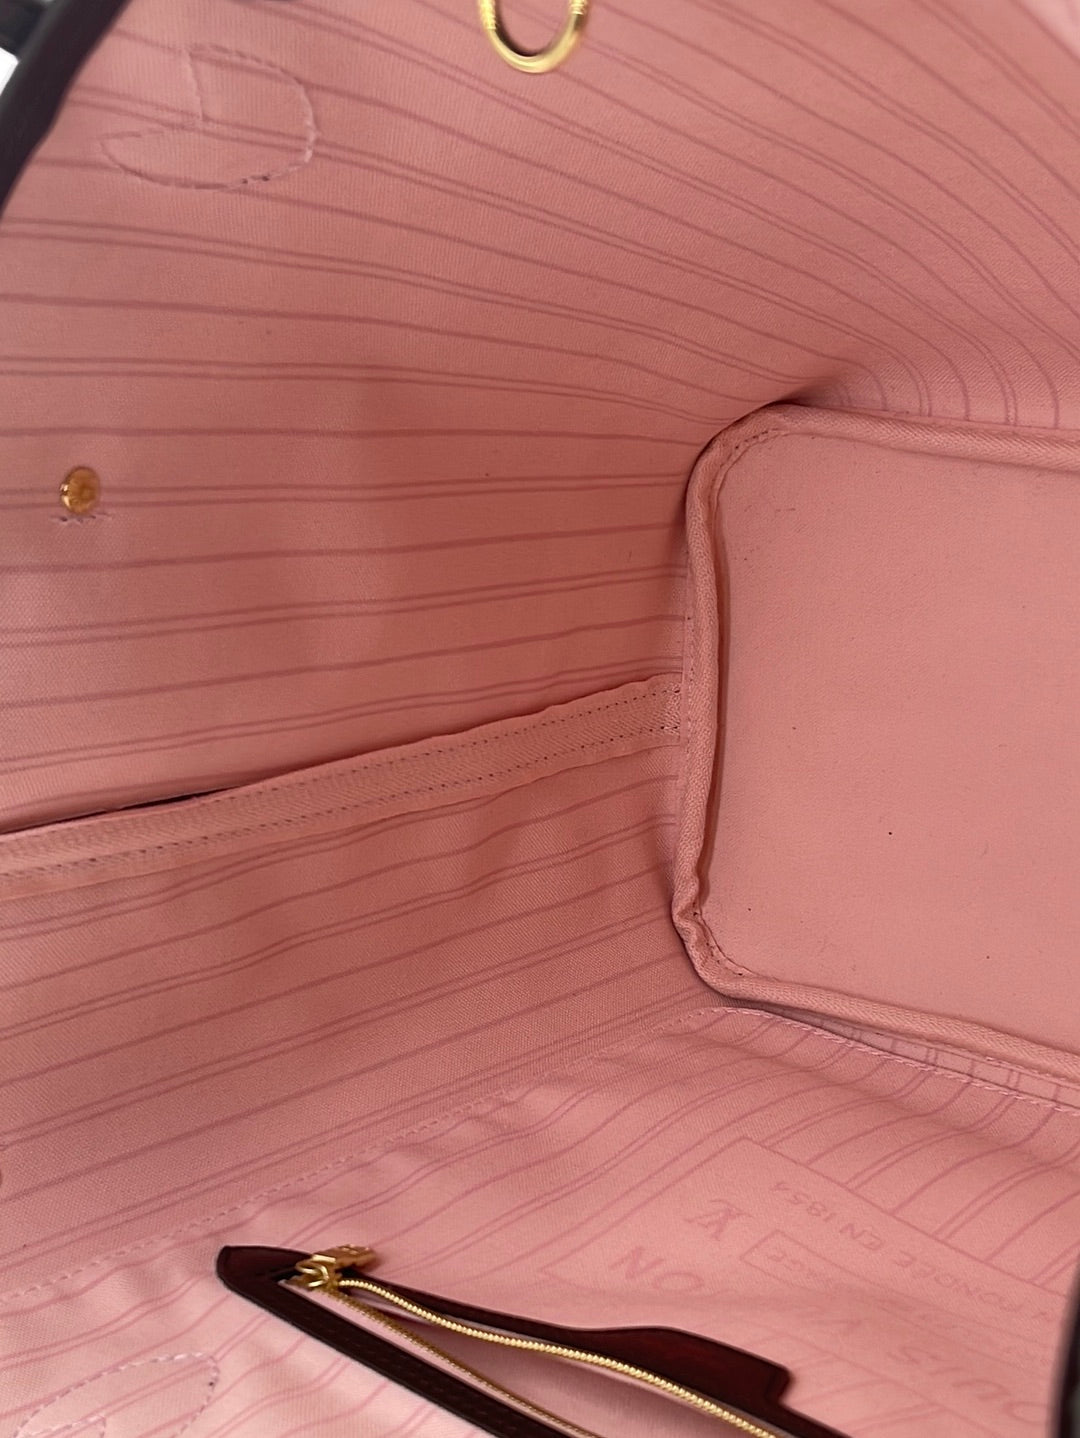 PreLoved Louis Vuitton Damier Ebene Neverfull MM Tote Bag (pink